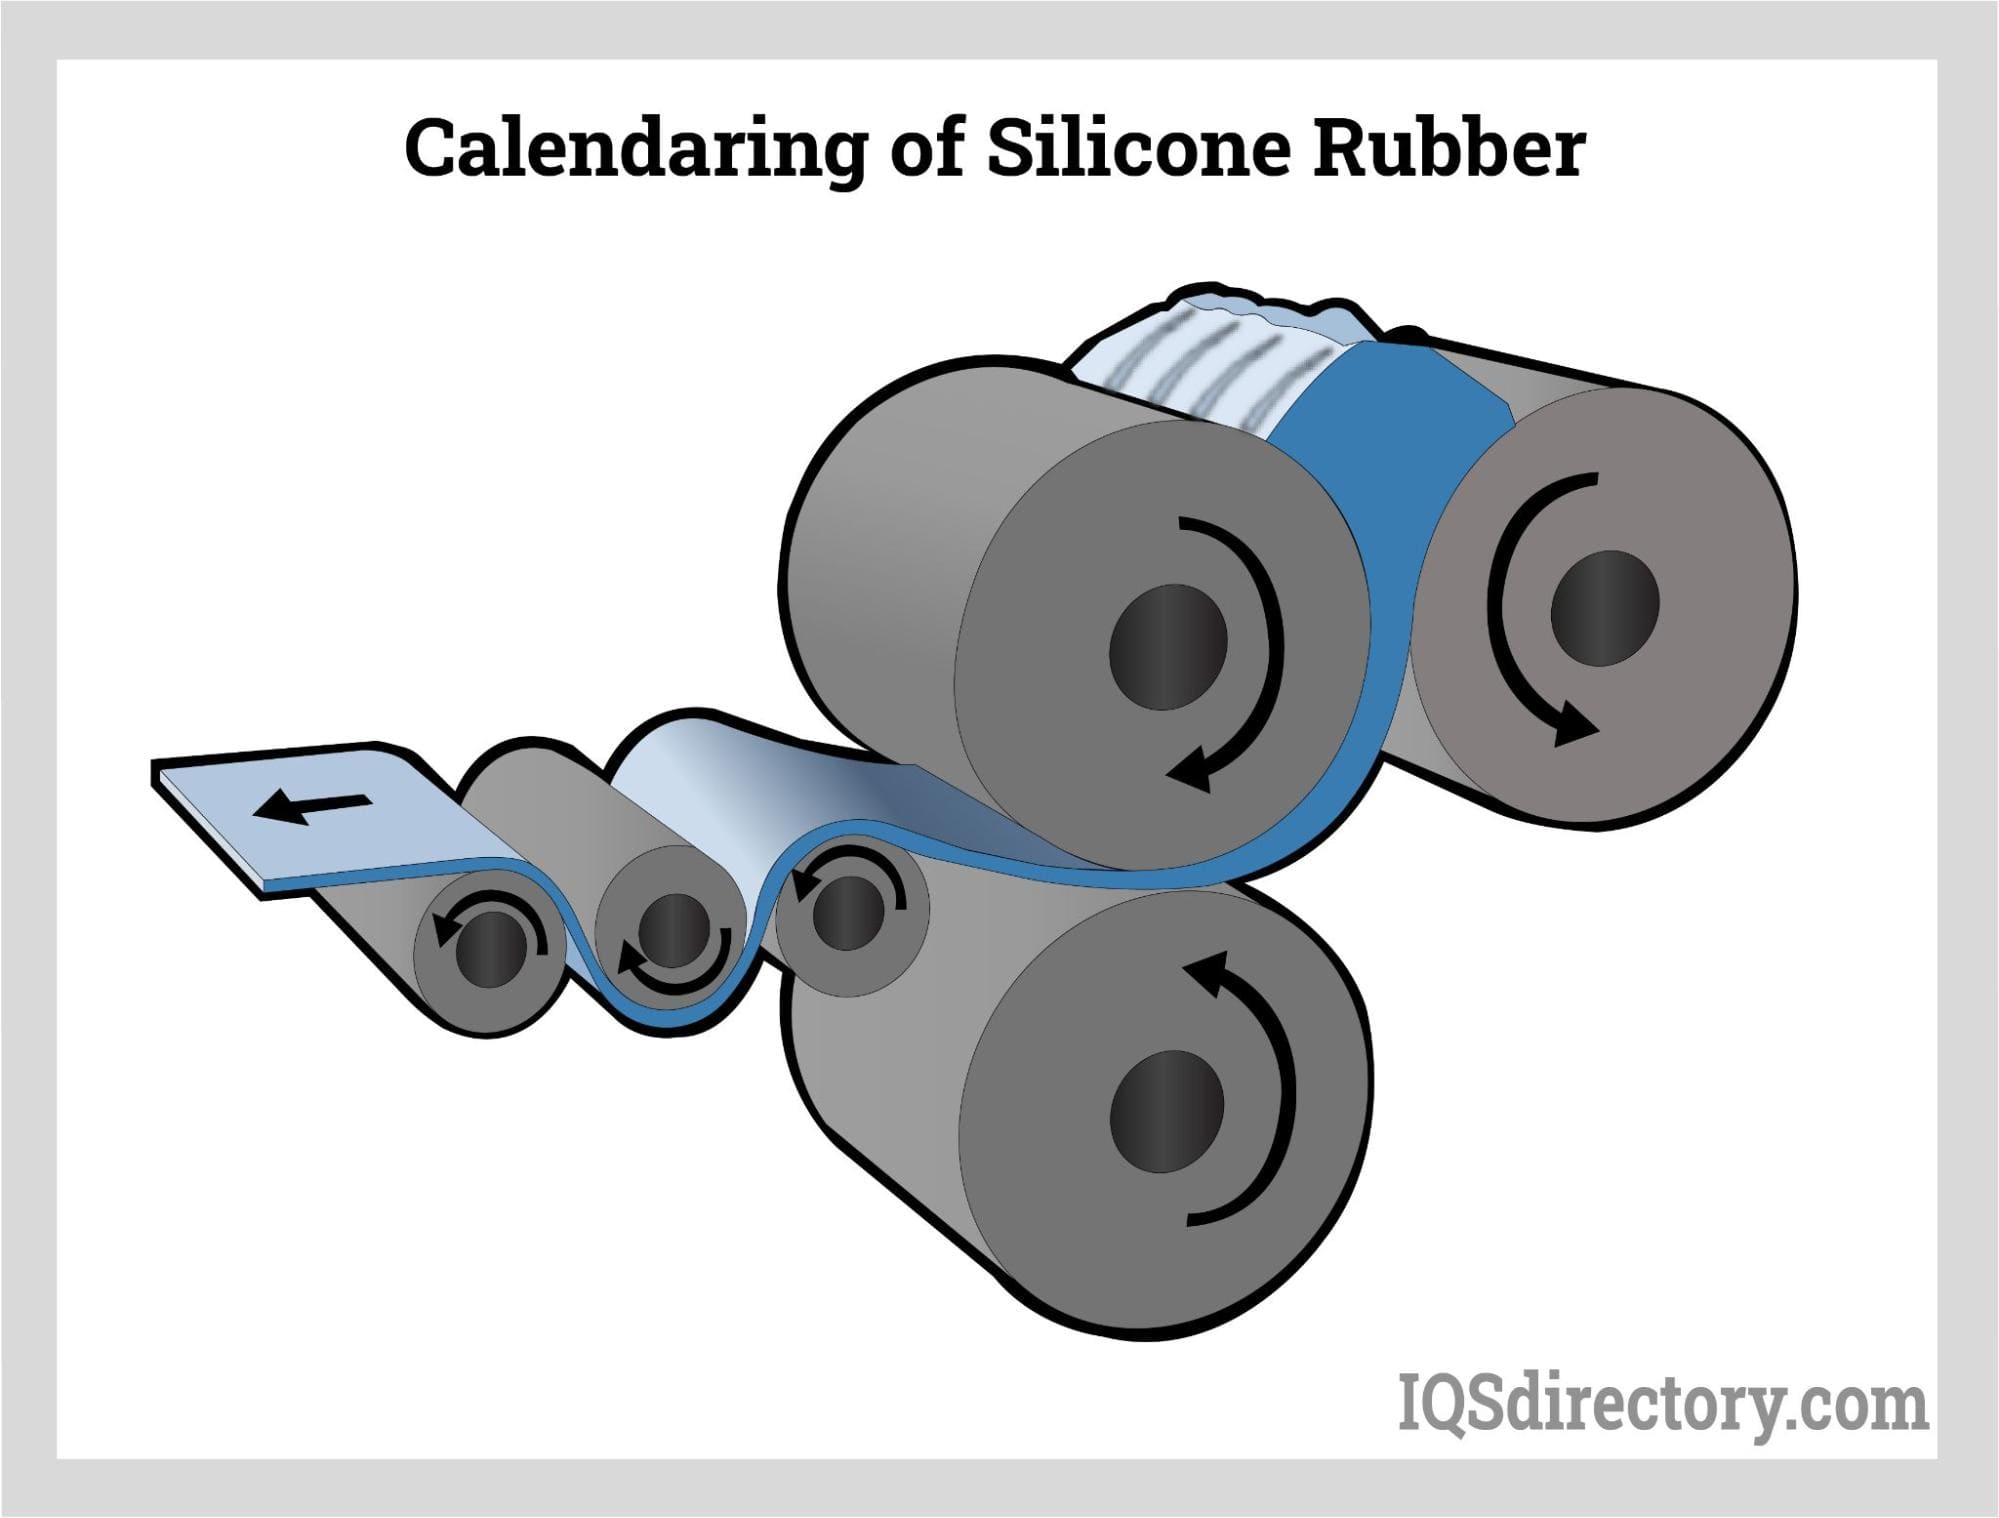 Calendaring of Silicone Rubber